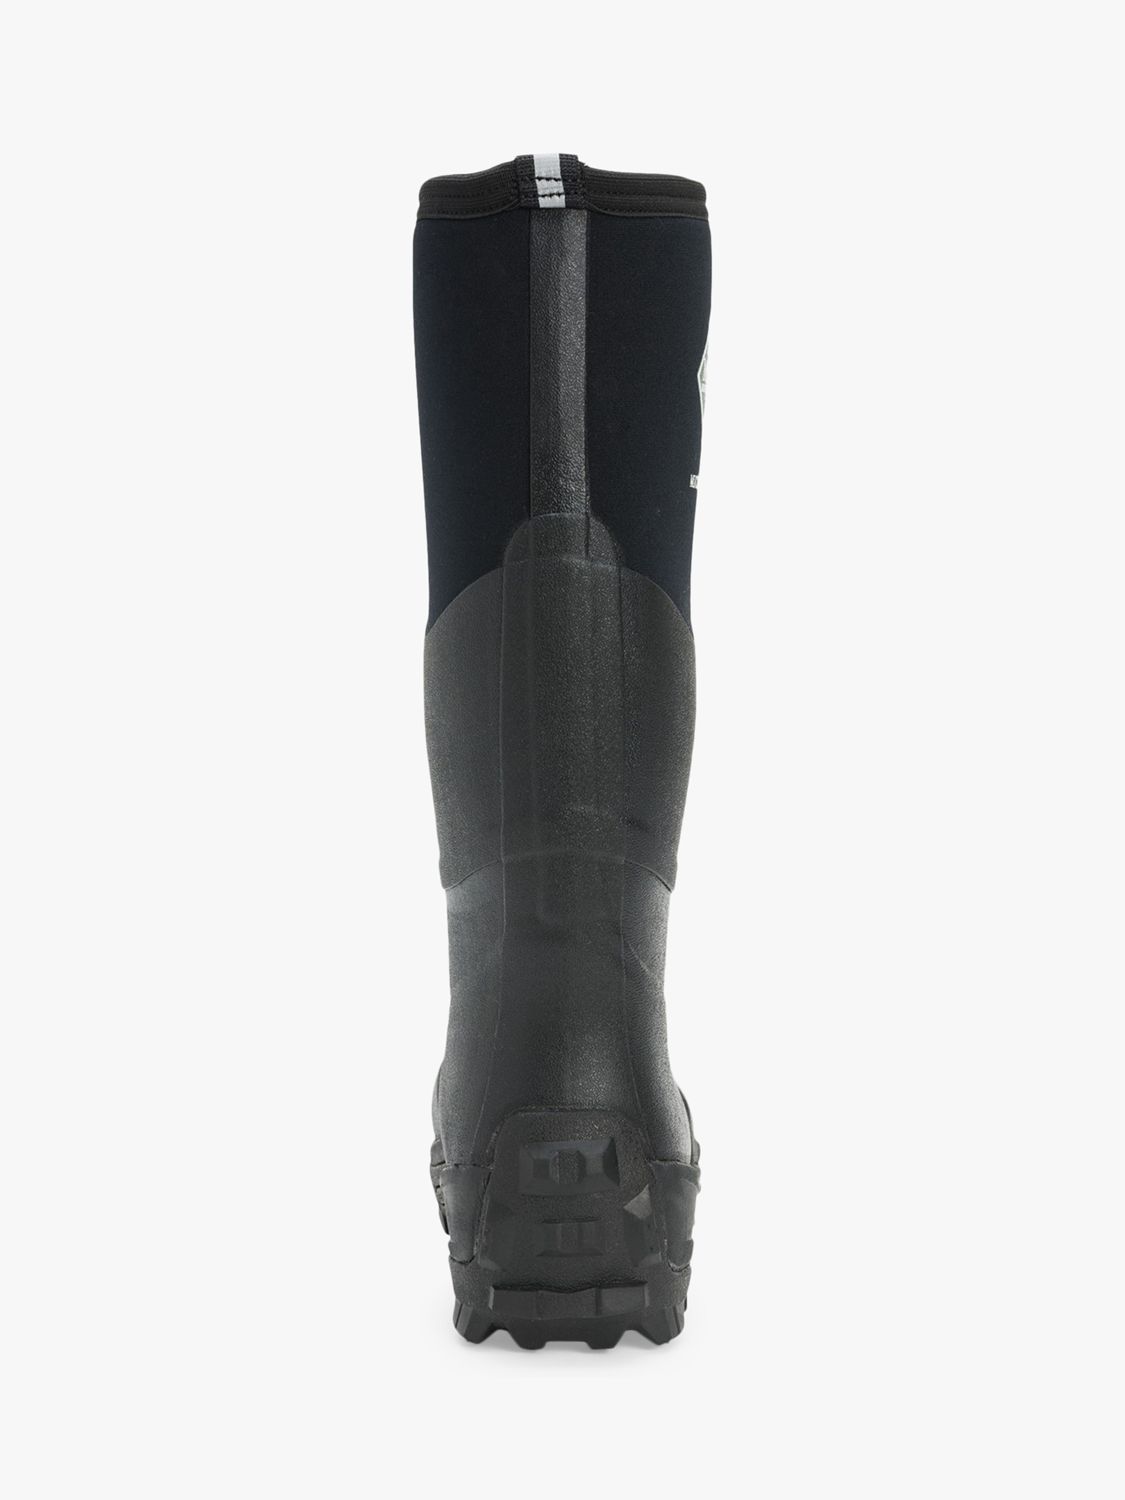 Muck Muckmaster Tall Wellington Boots, Black, 4